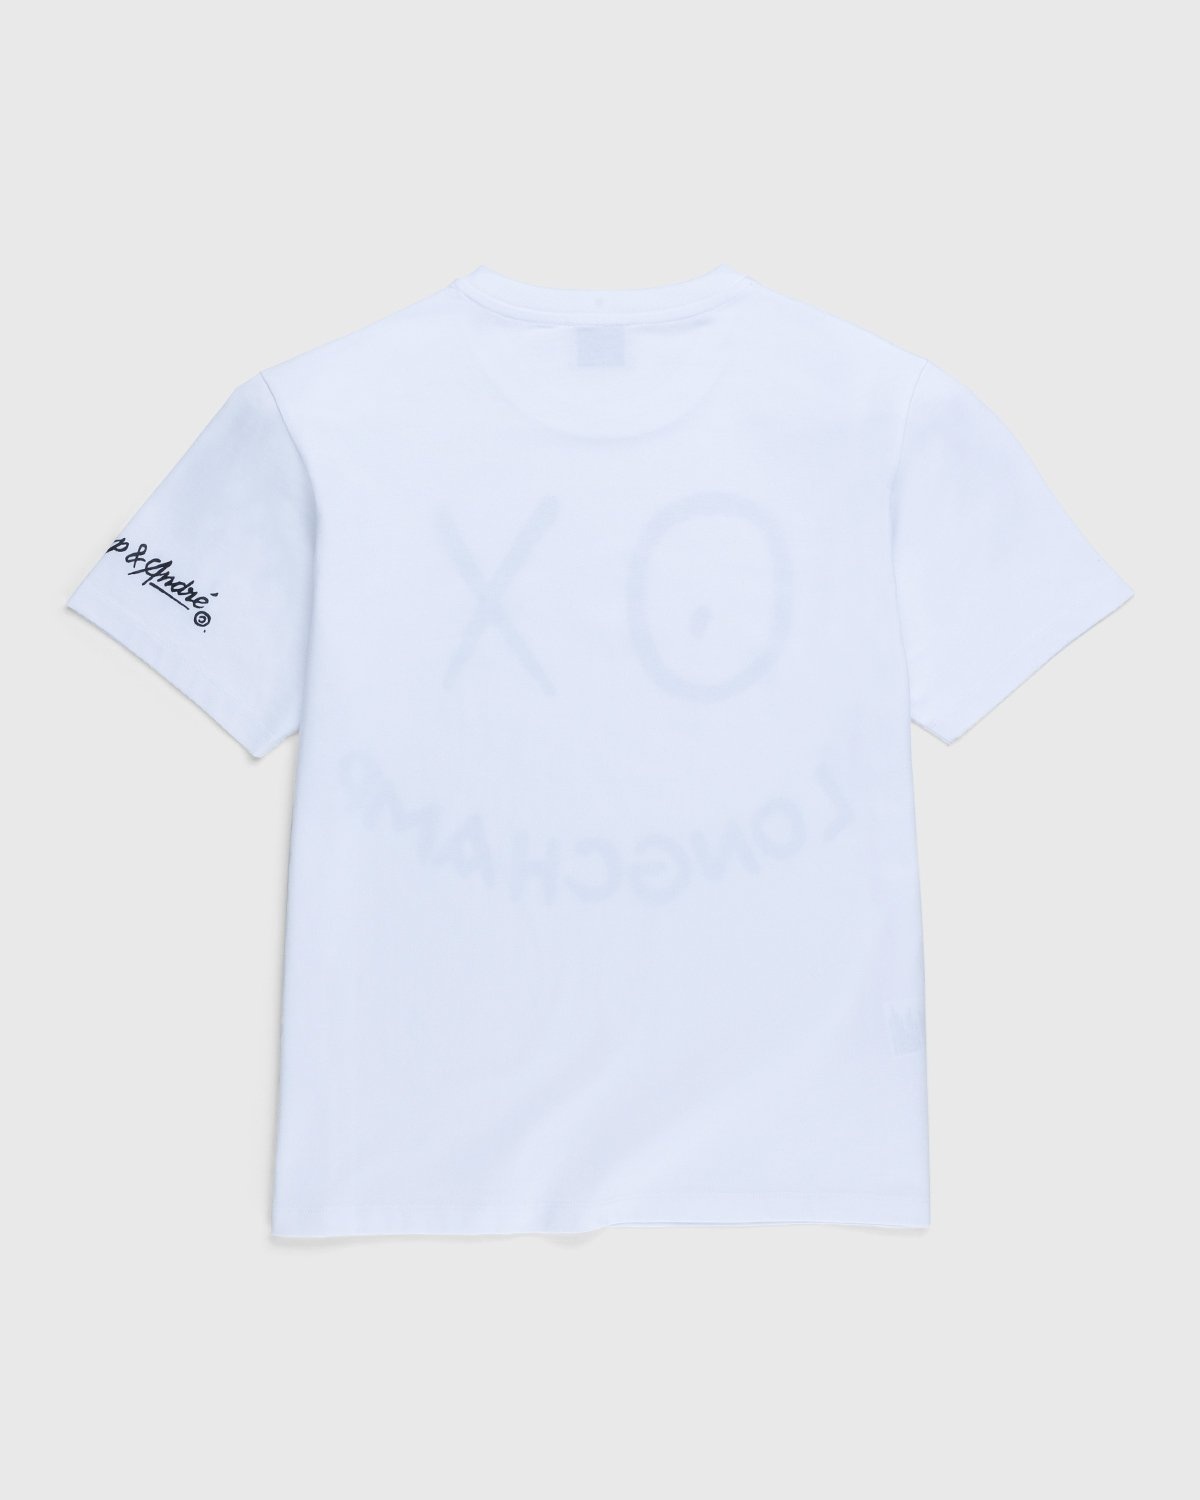 Longchamp x André Saraiva – T-Shirt White - Tops - White - Image 3